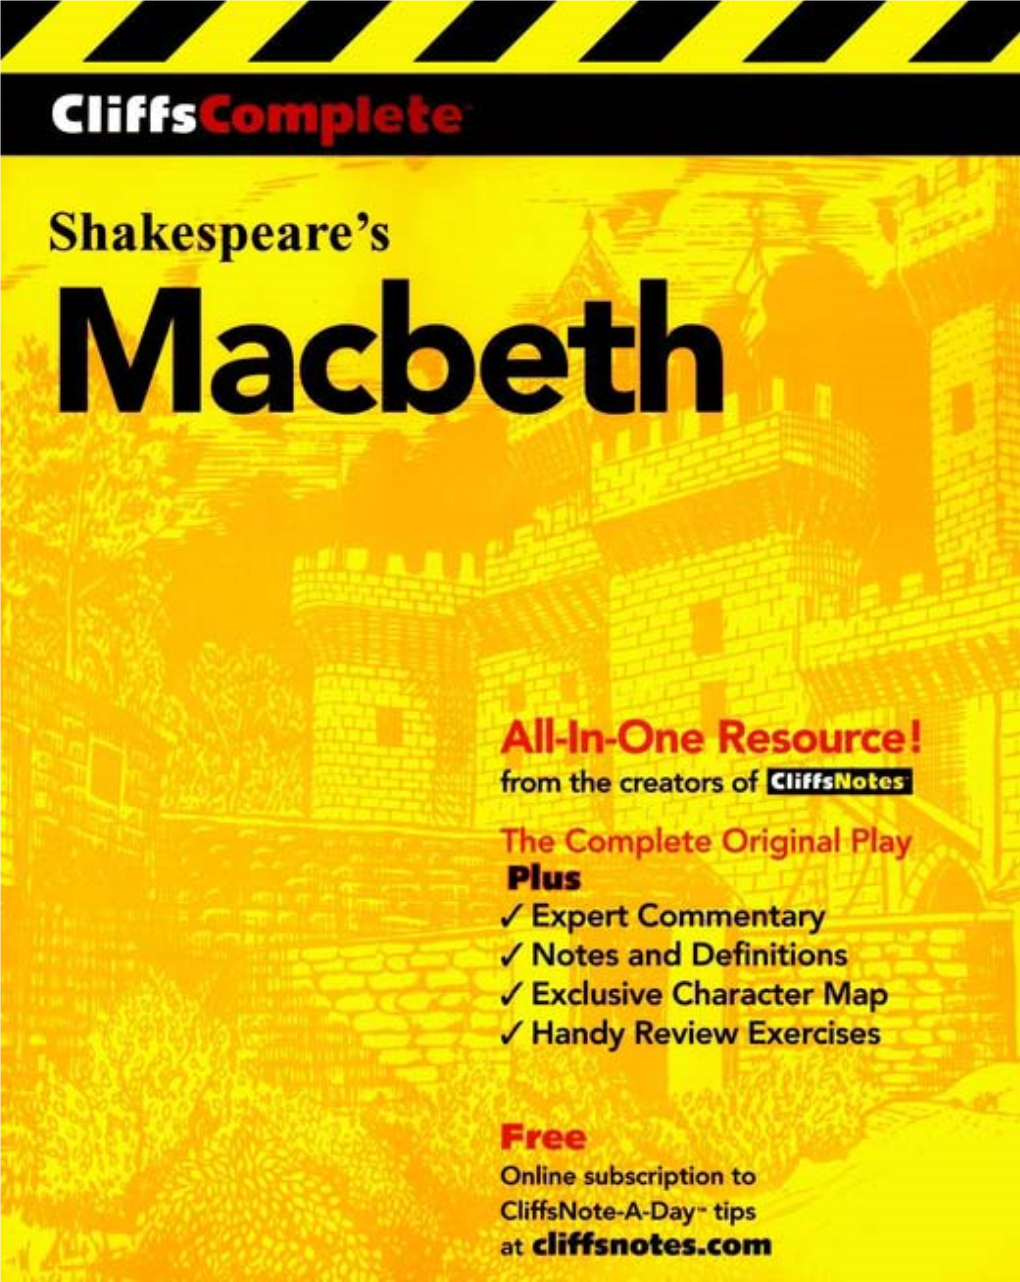 Cliffs Complete Shakespeare's Macbeth